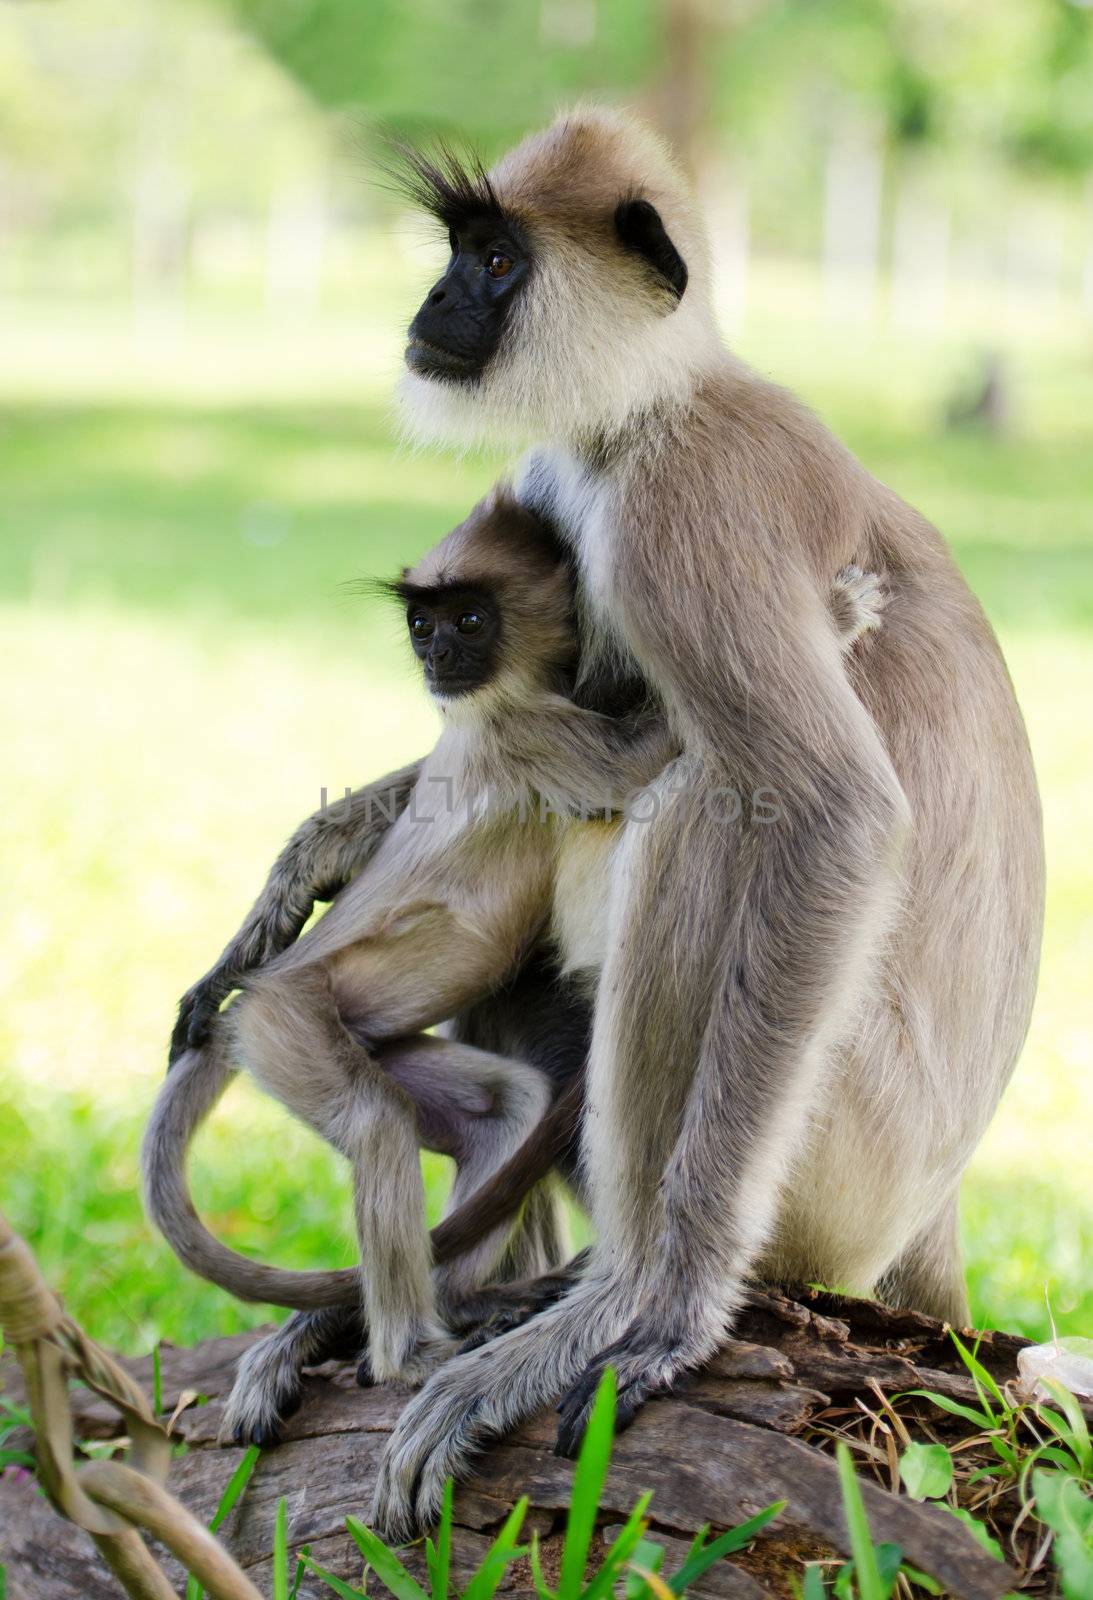 Wild monkey embraces her baby, Asia, Sri Lanka